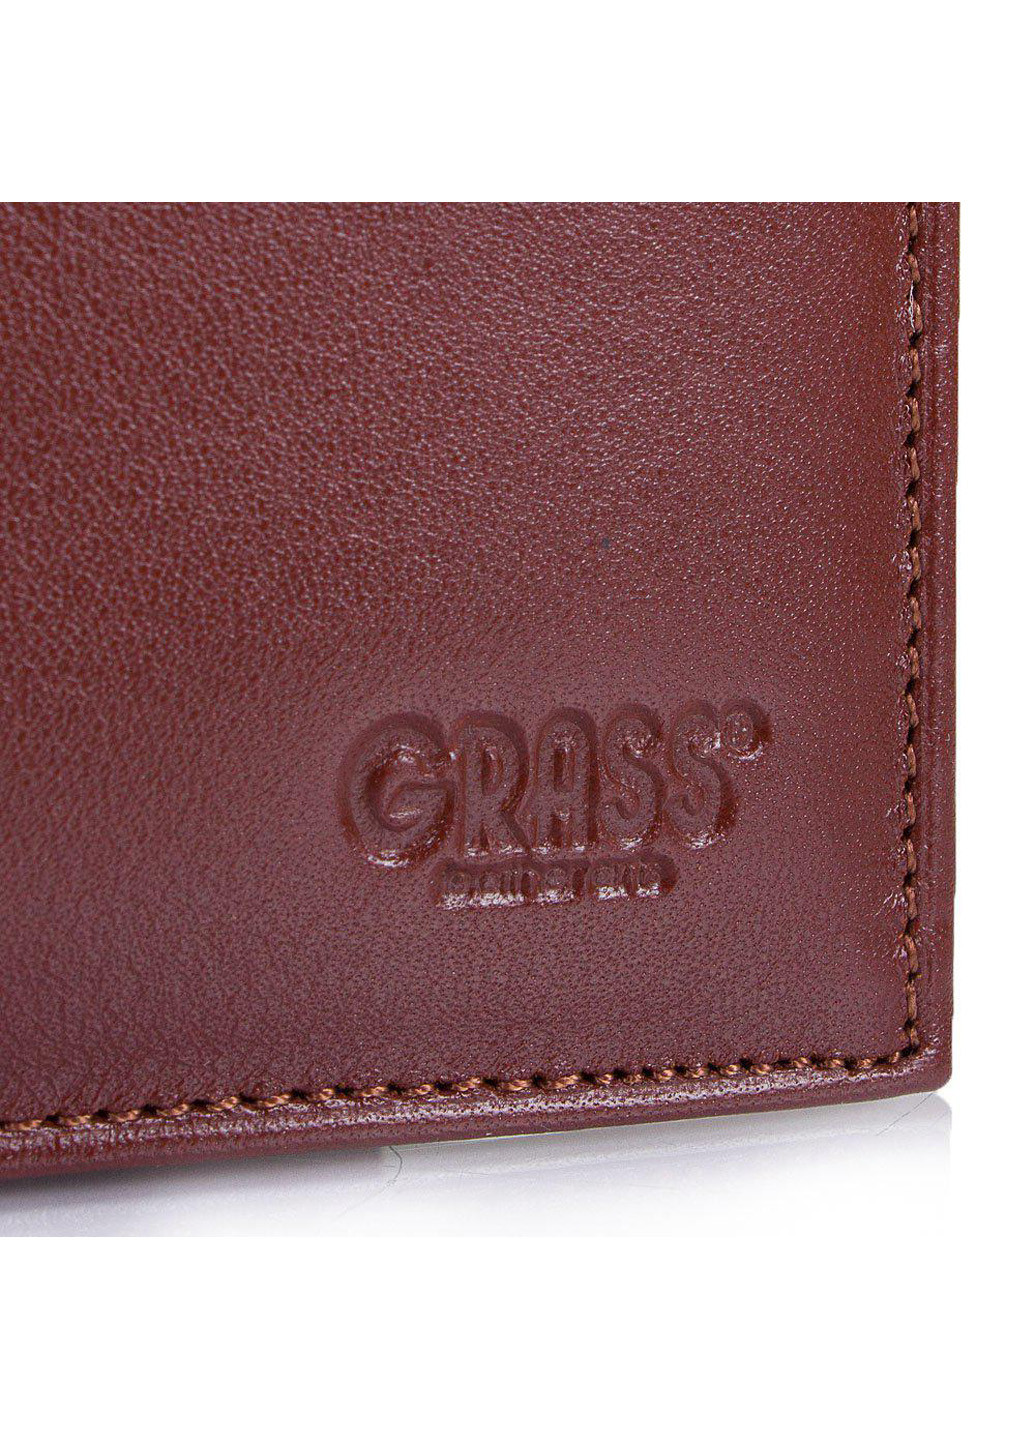 Мужское кожаное портмоне 10,5х9х2 см Grass (195770969)